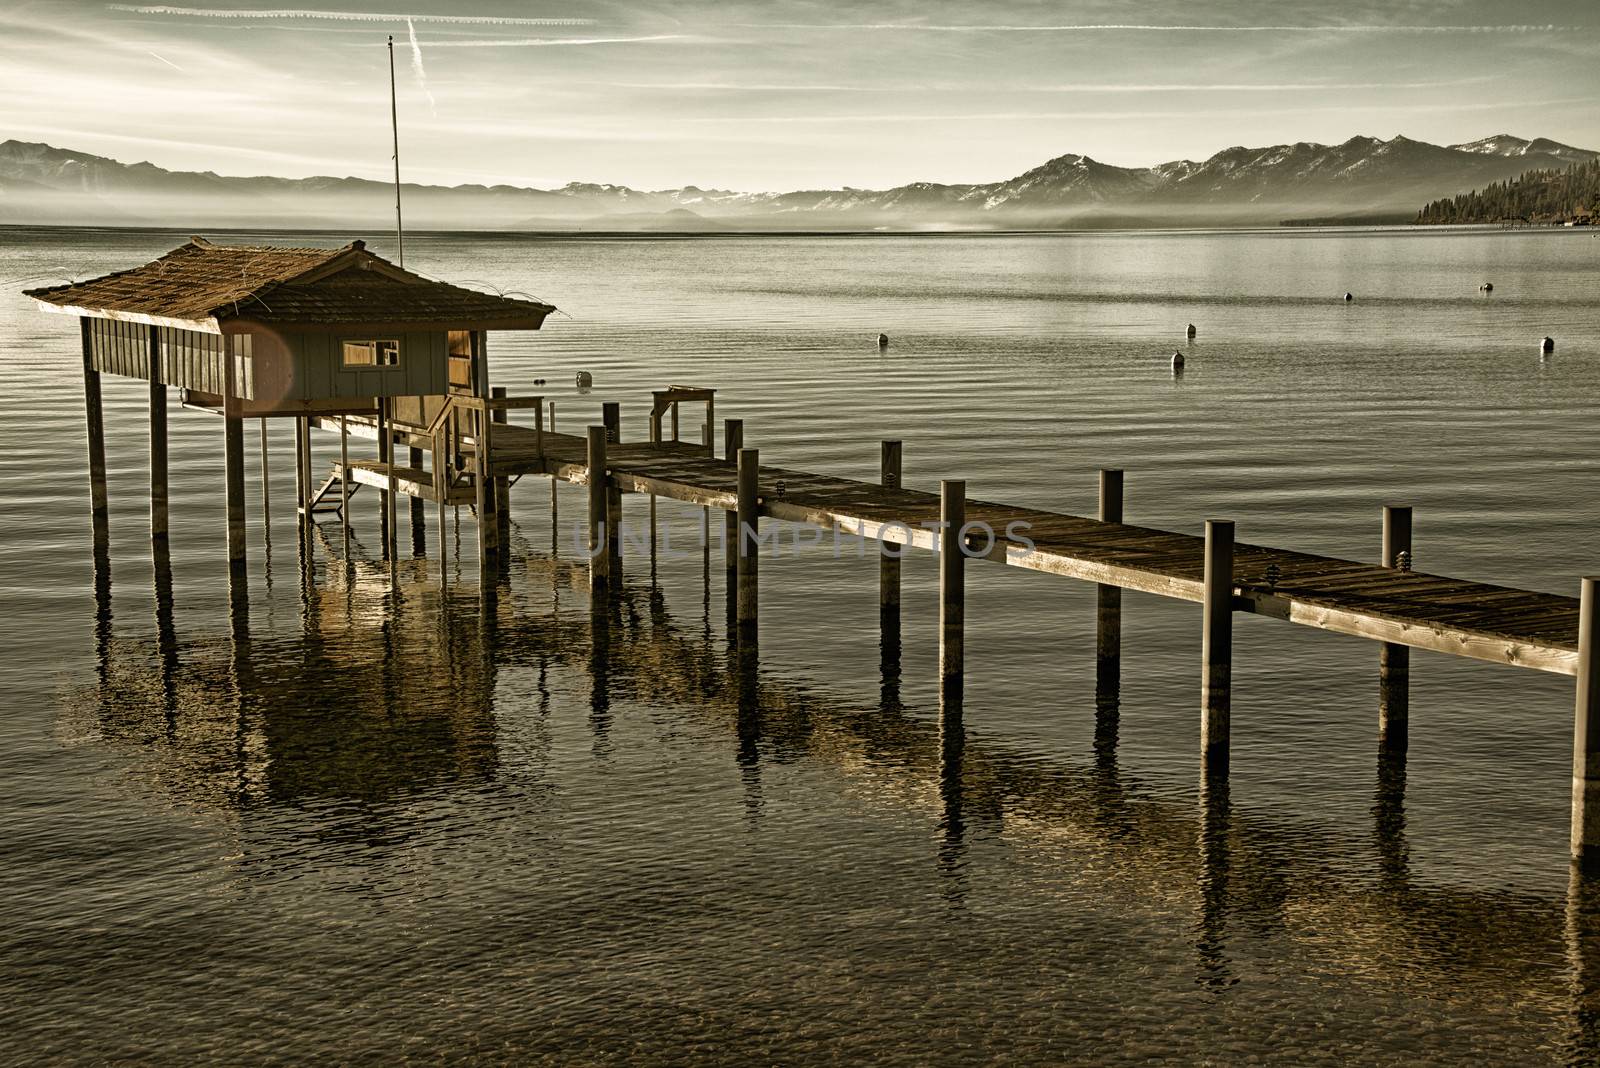 Stilt hut in a lake, Carnelian Bay, Lake Tahoe, California, USA